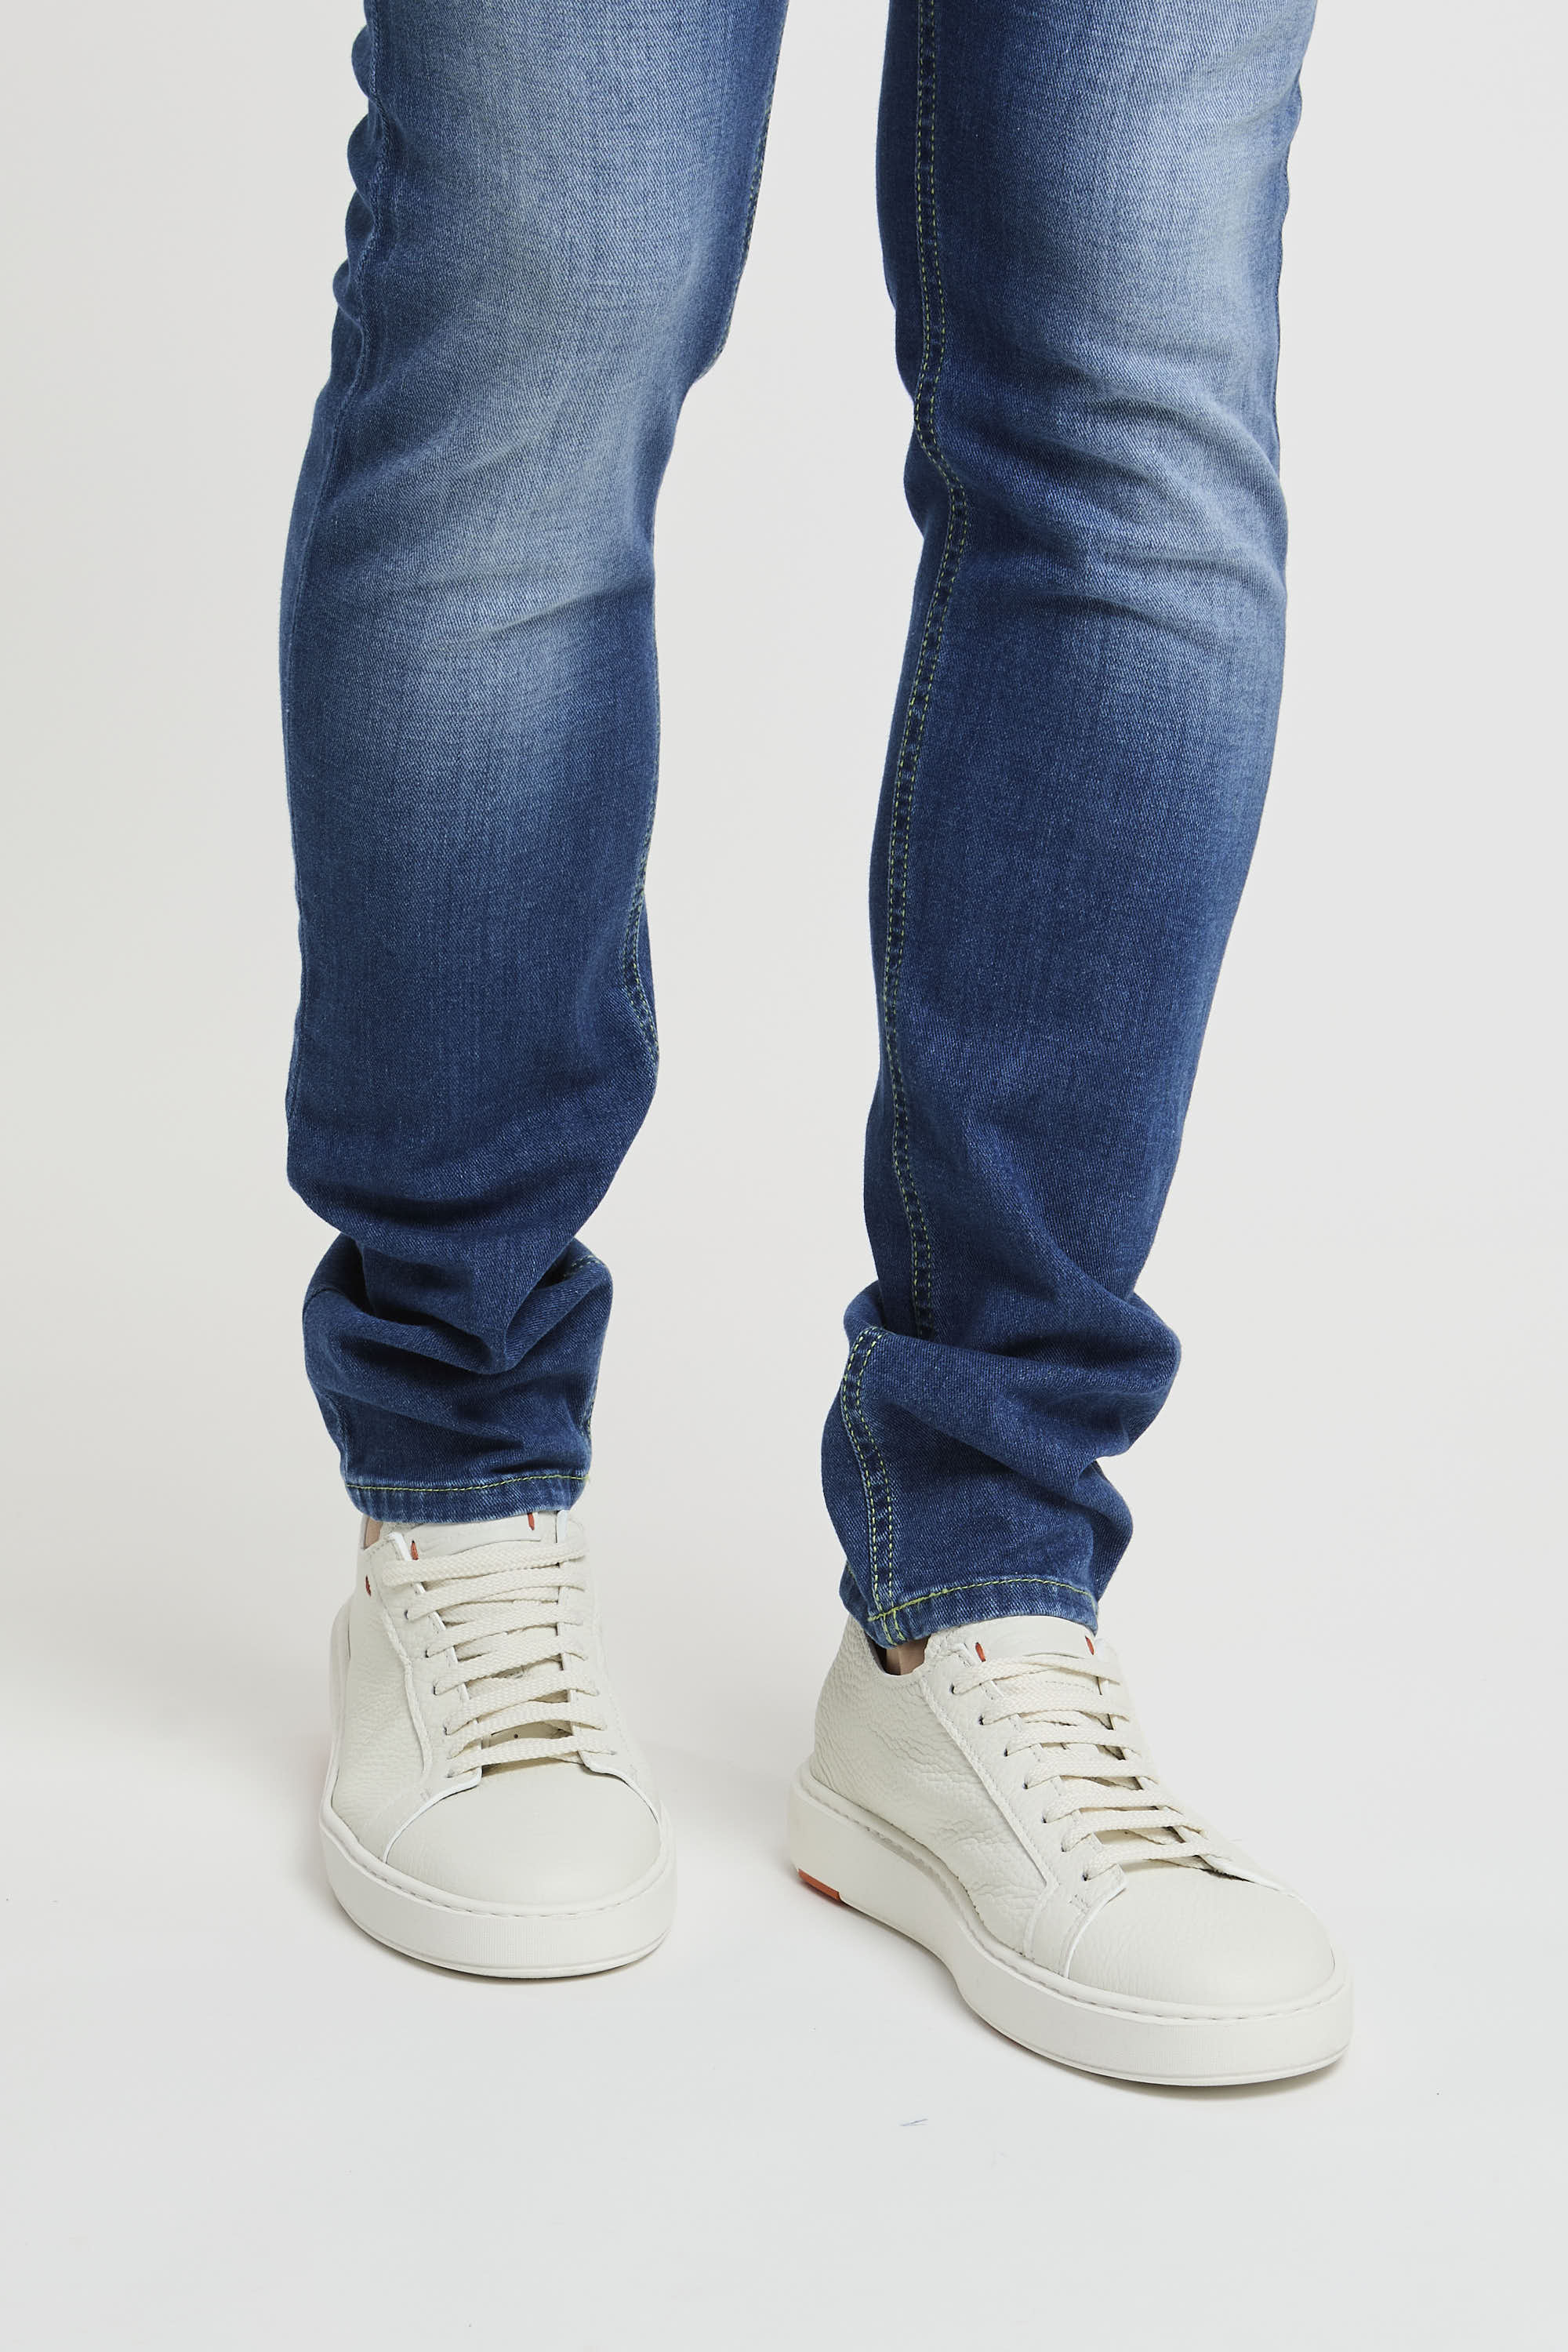 Handpicked Jeans Parma in Cotton Denim-7